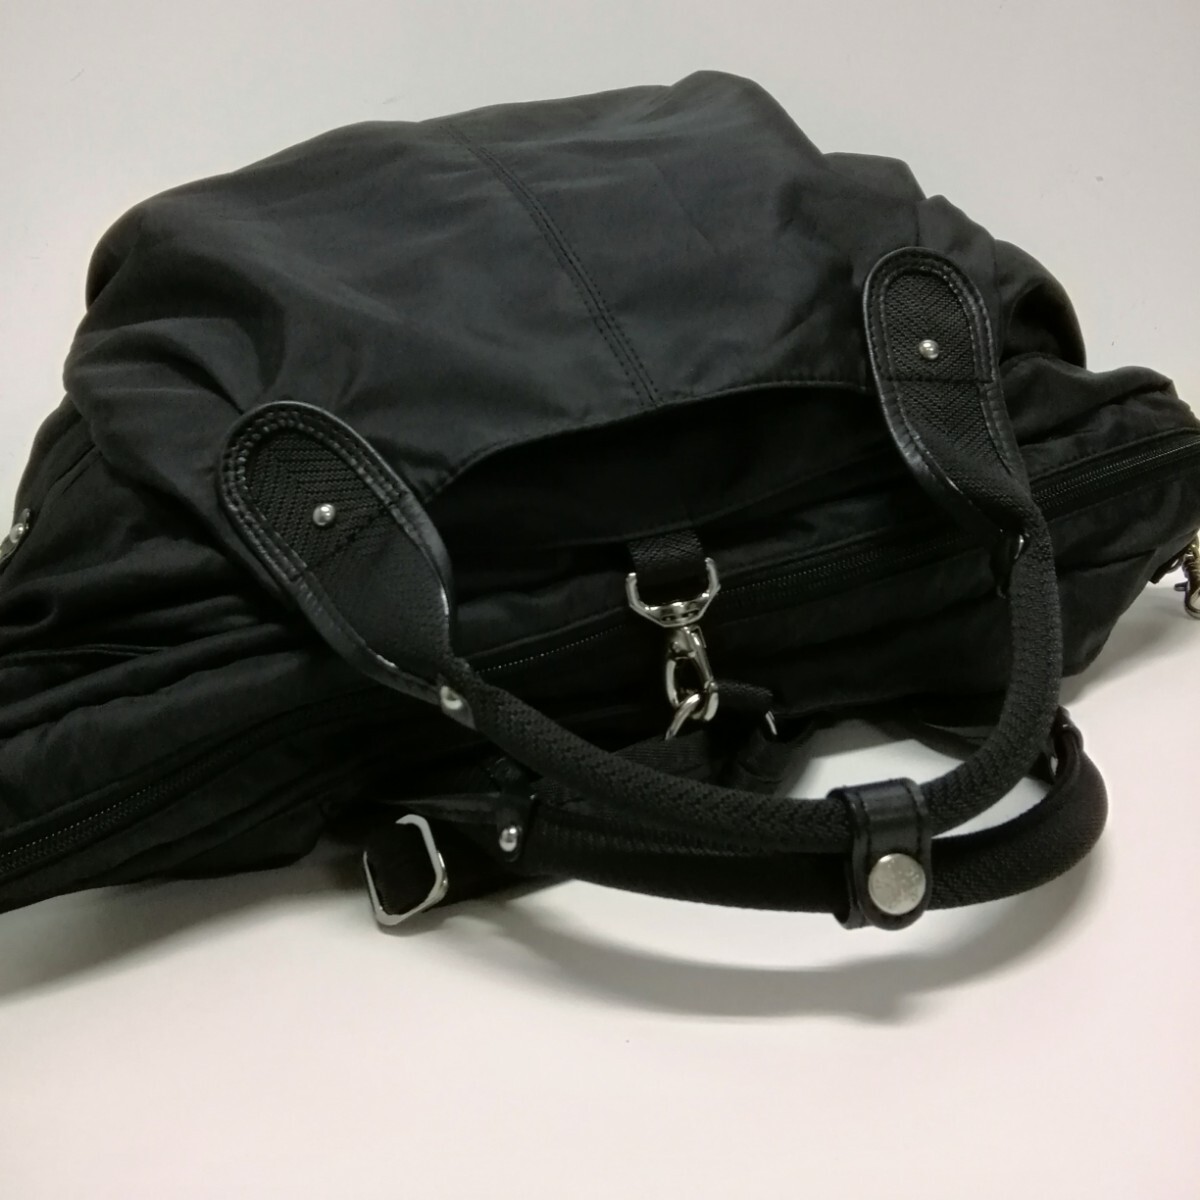 kanana project kana na Project rucksack backpack back bag bag black group 48948e knee way bag 3WAY 12L approximately 690g